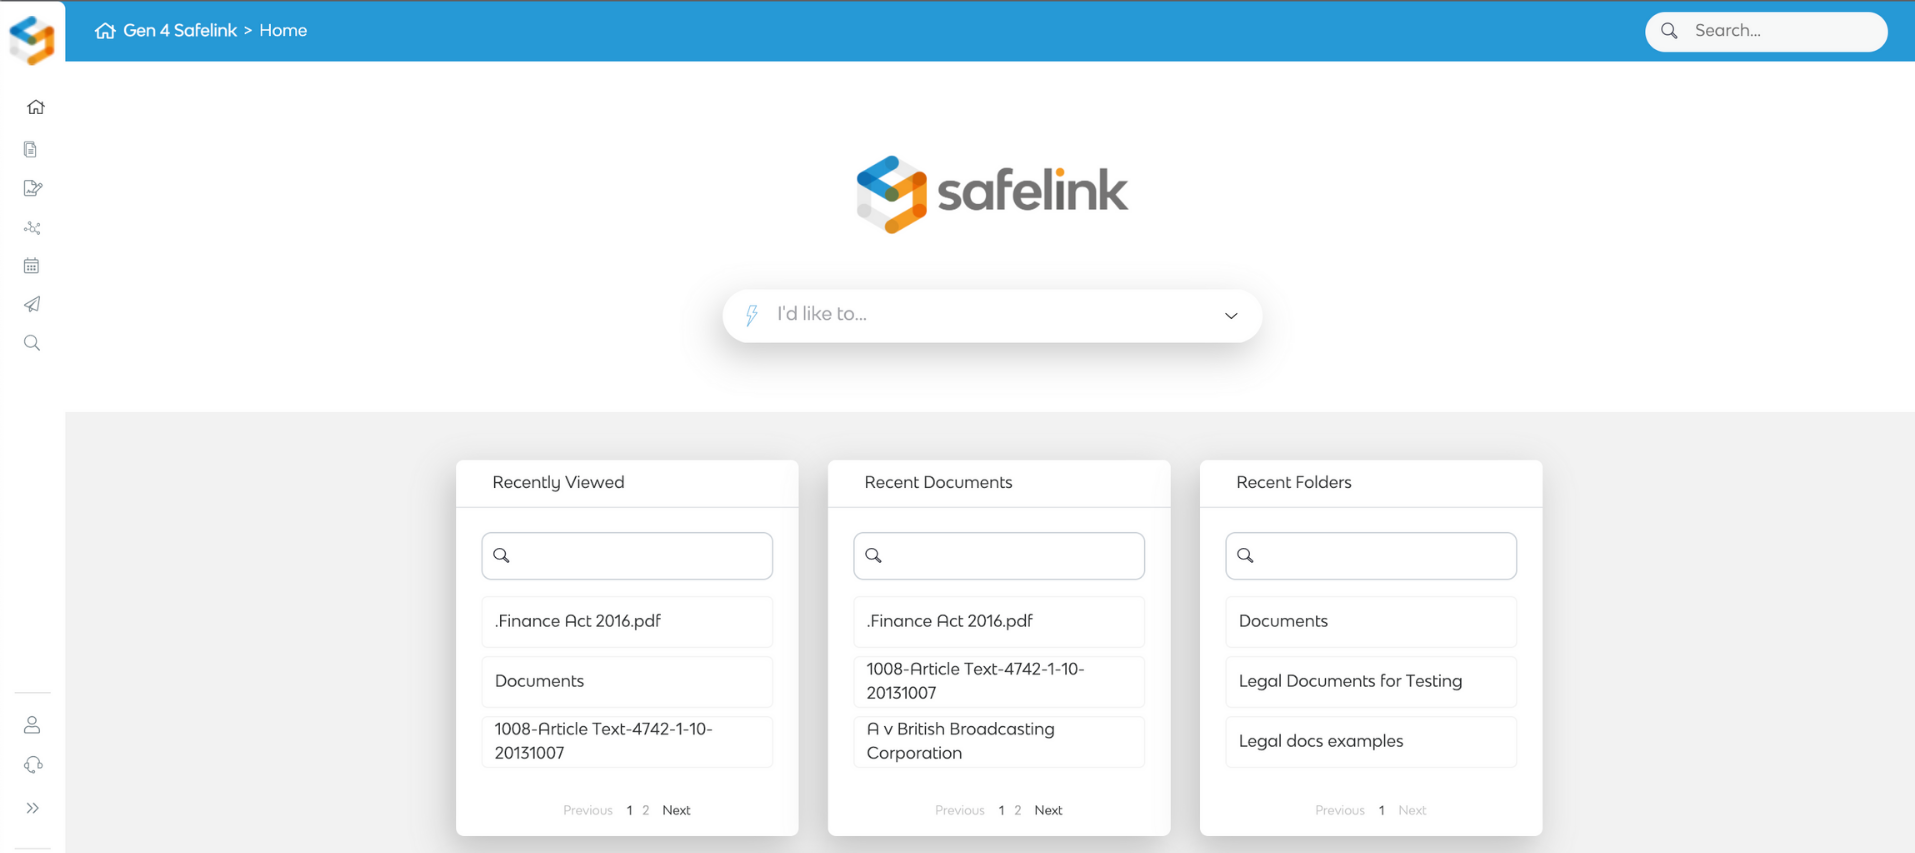 Safelink Homepage